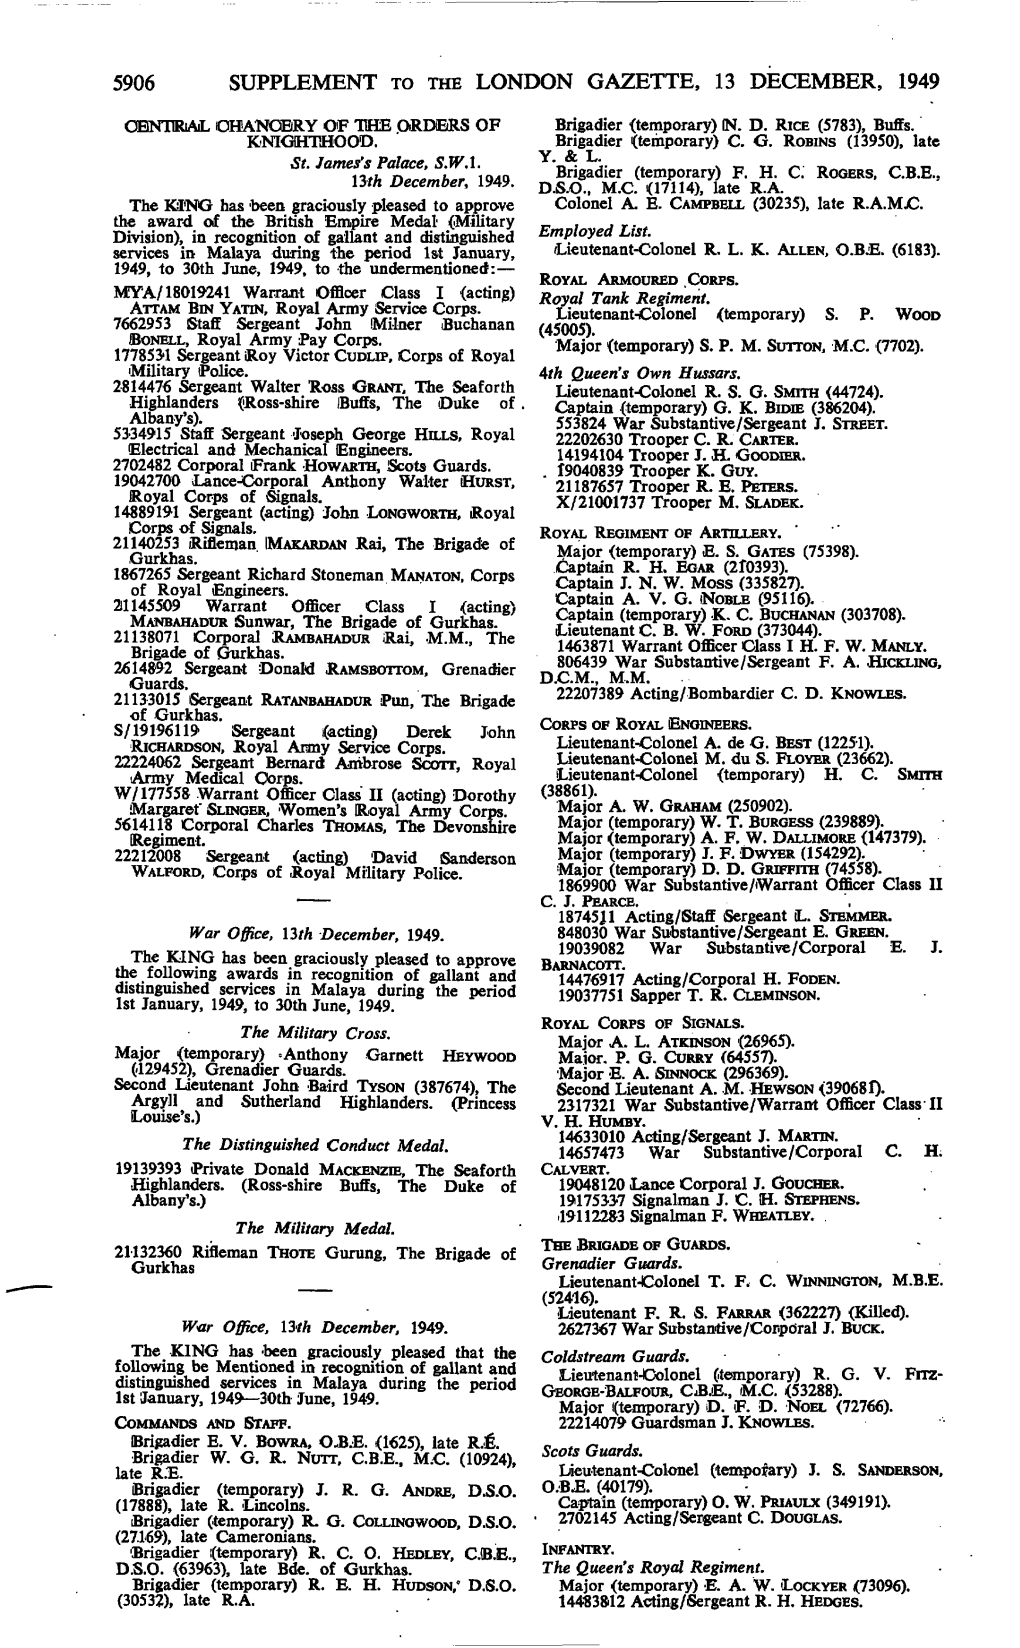 5906 Supplement to the London Gazette, 13 December, 1949